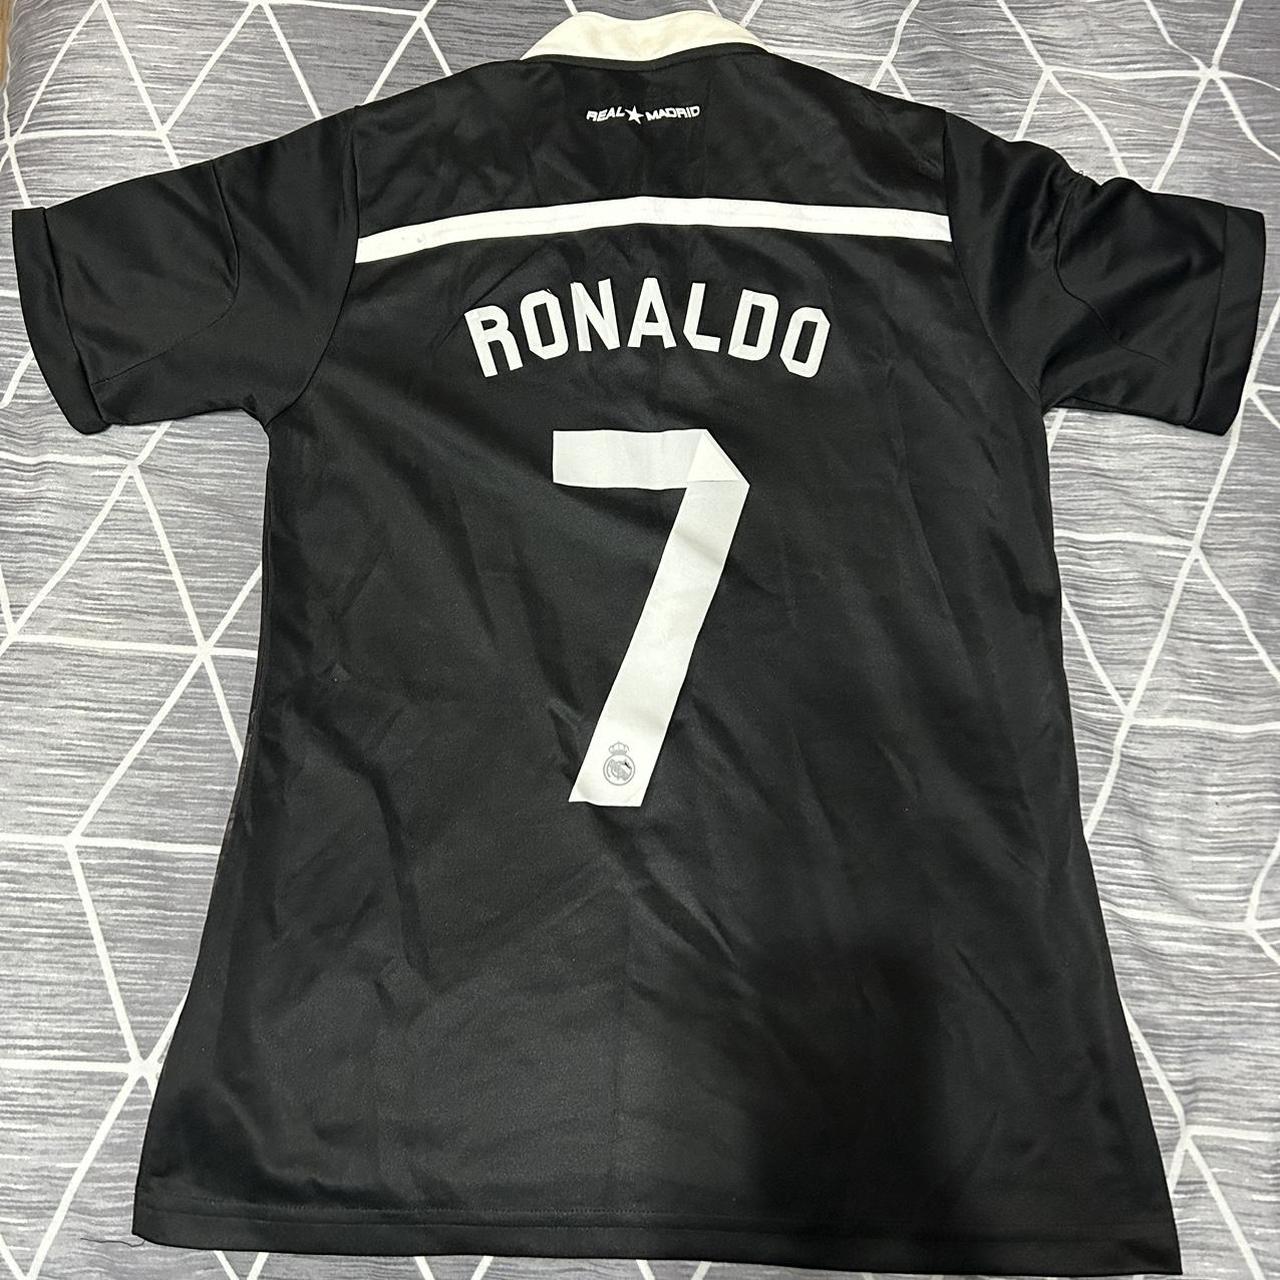 real madrid black jersey ronaldo